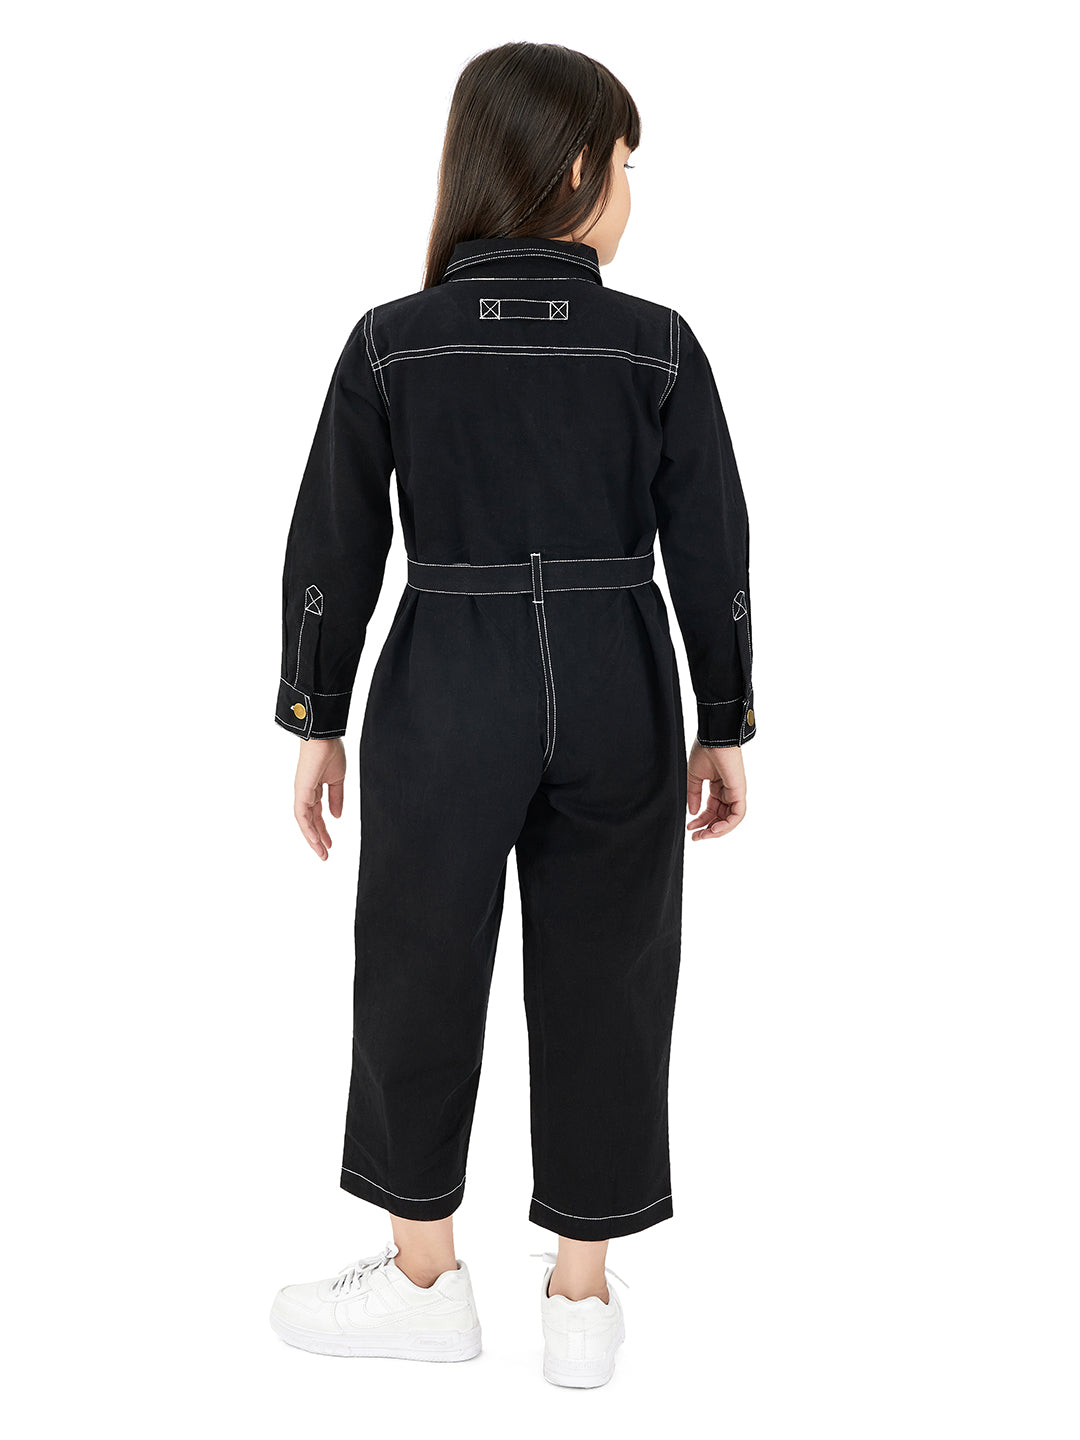 Olele® Girls Brooklyn Boiler Suit with Zipper Opening - Black Cotton